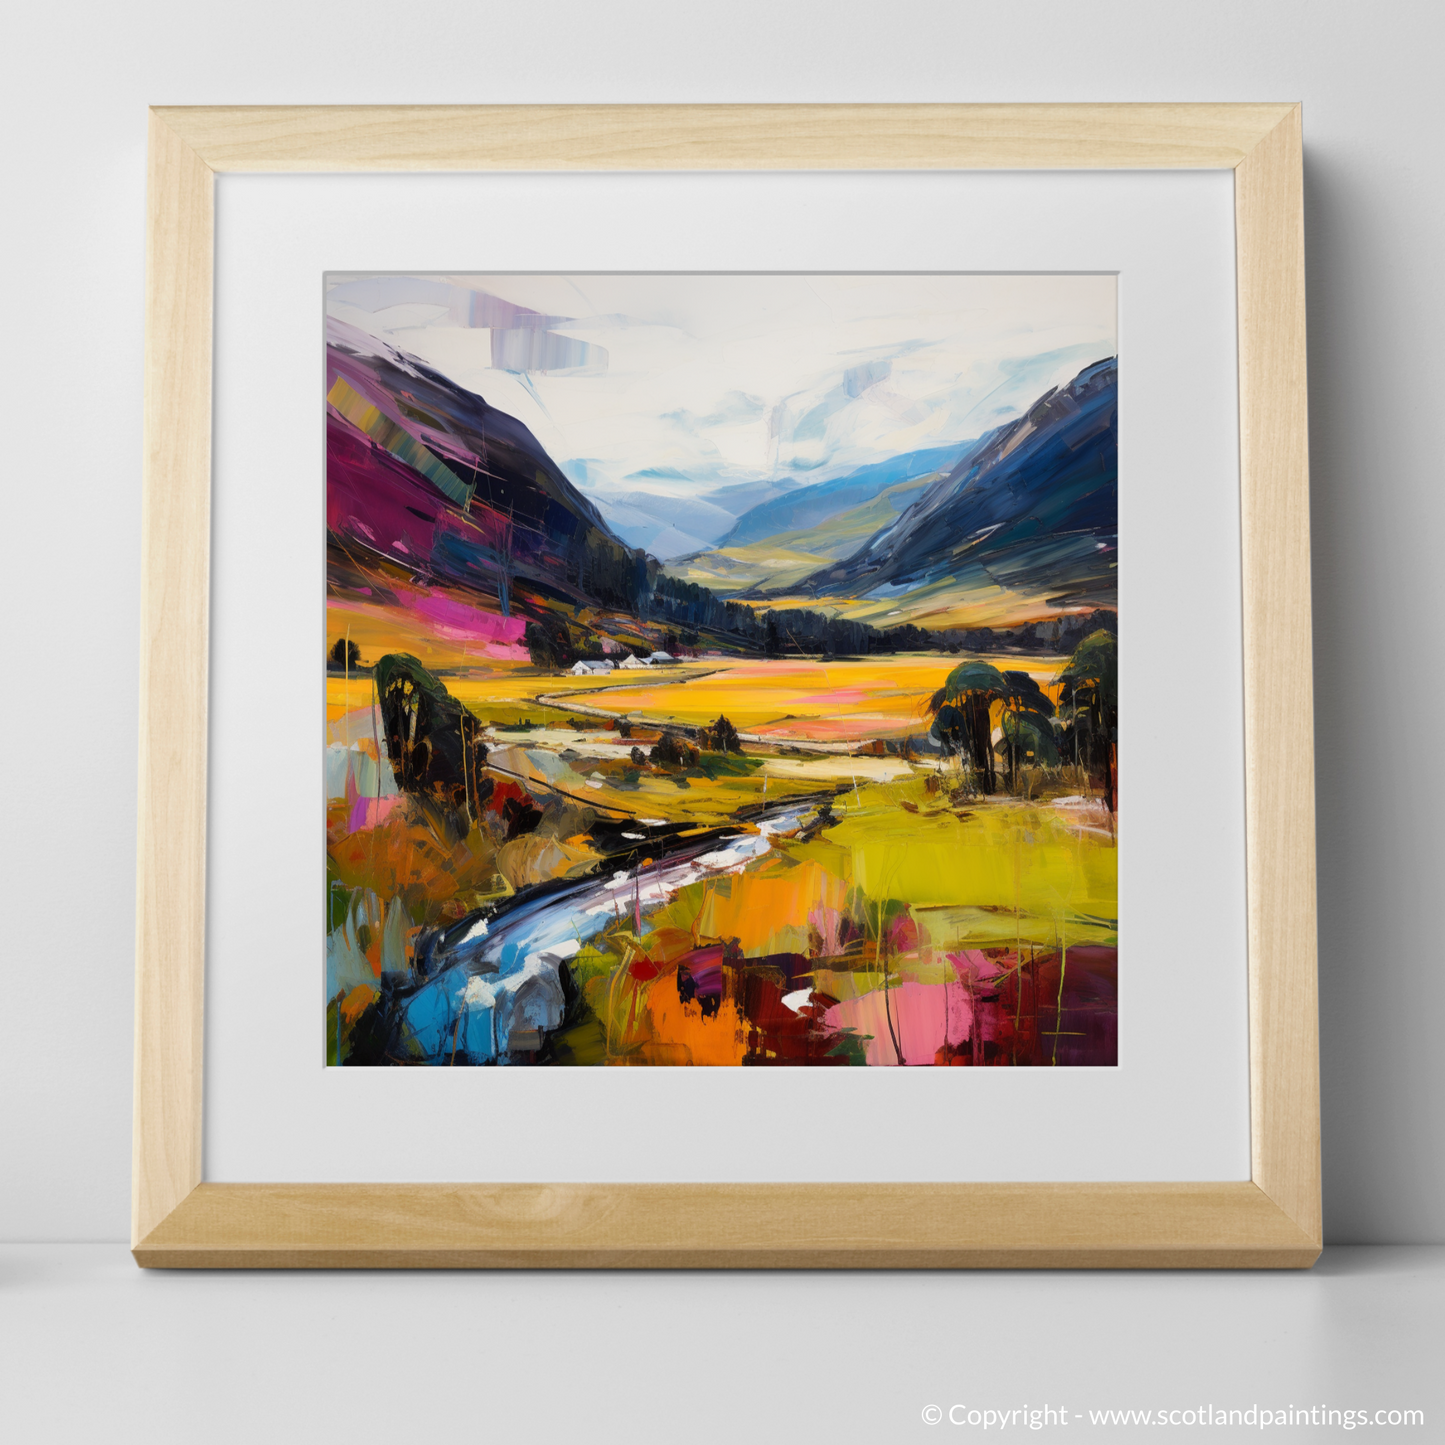 Art Print of Glen Feshie, Highlands with a natural frame